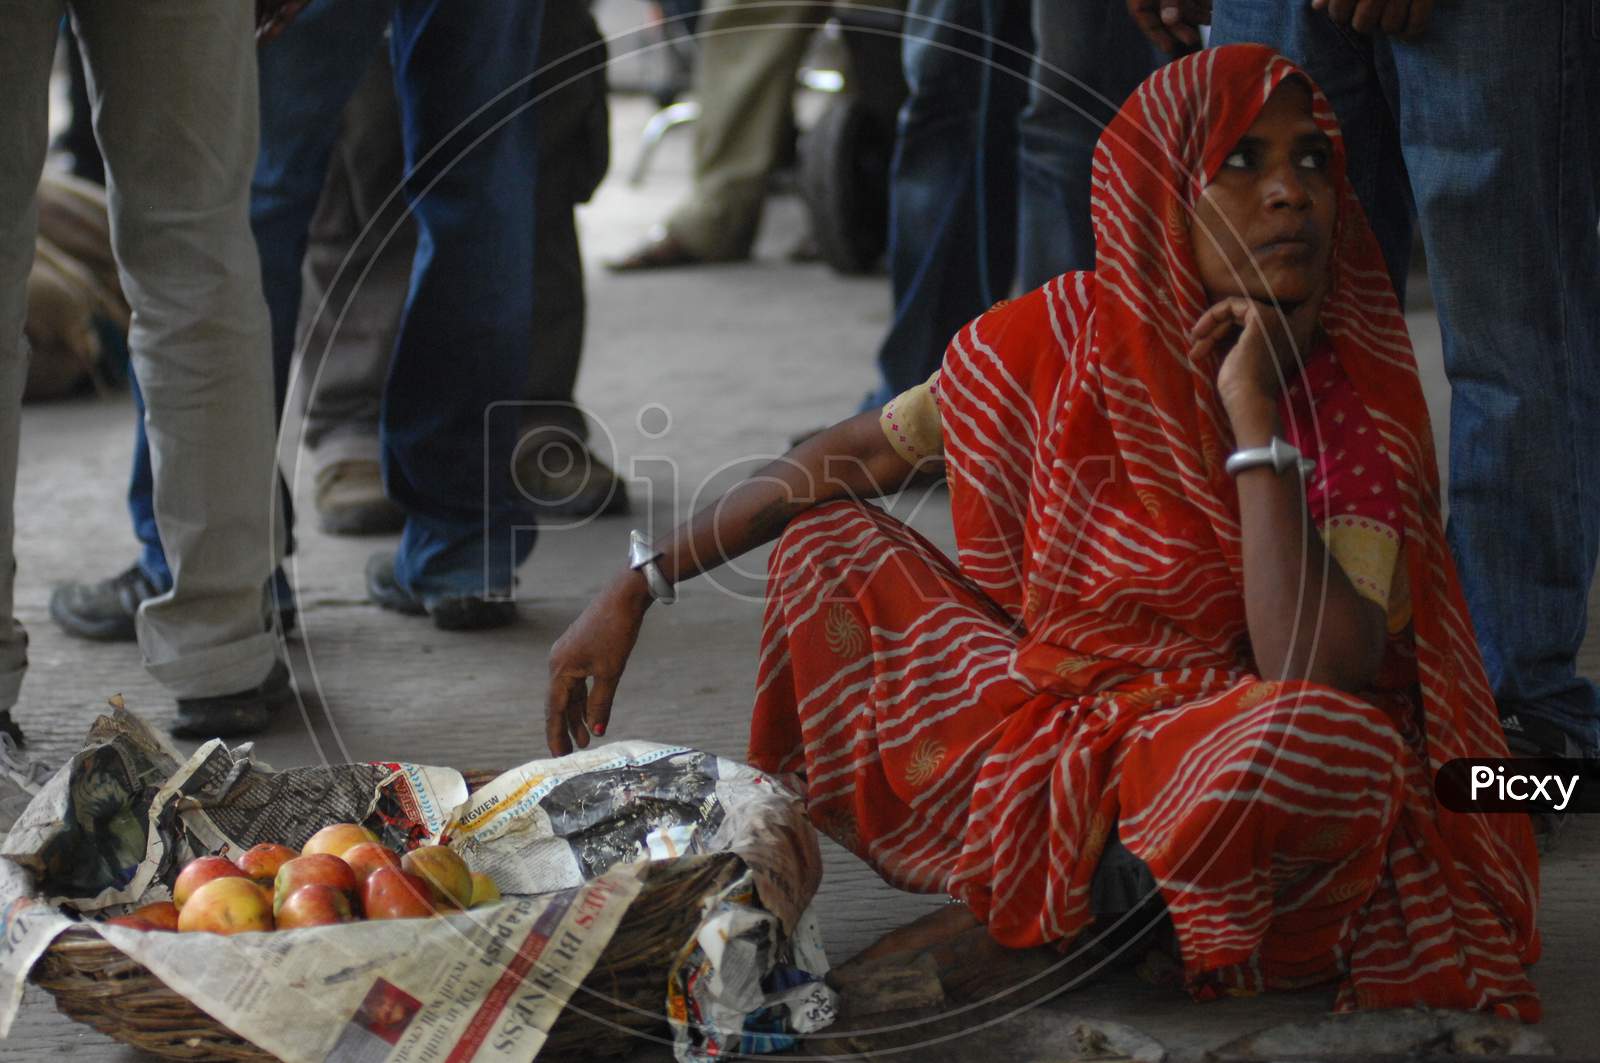 Indian Woman Vendor Selling Apples